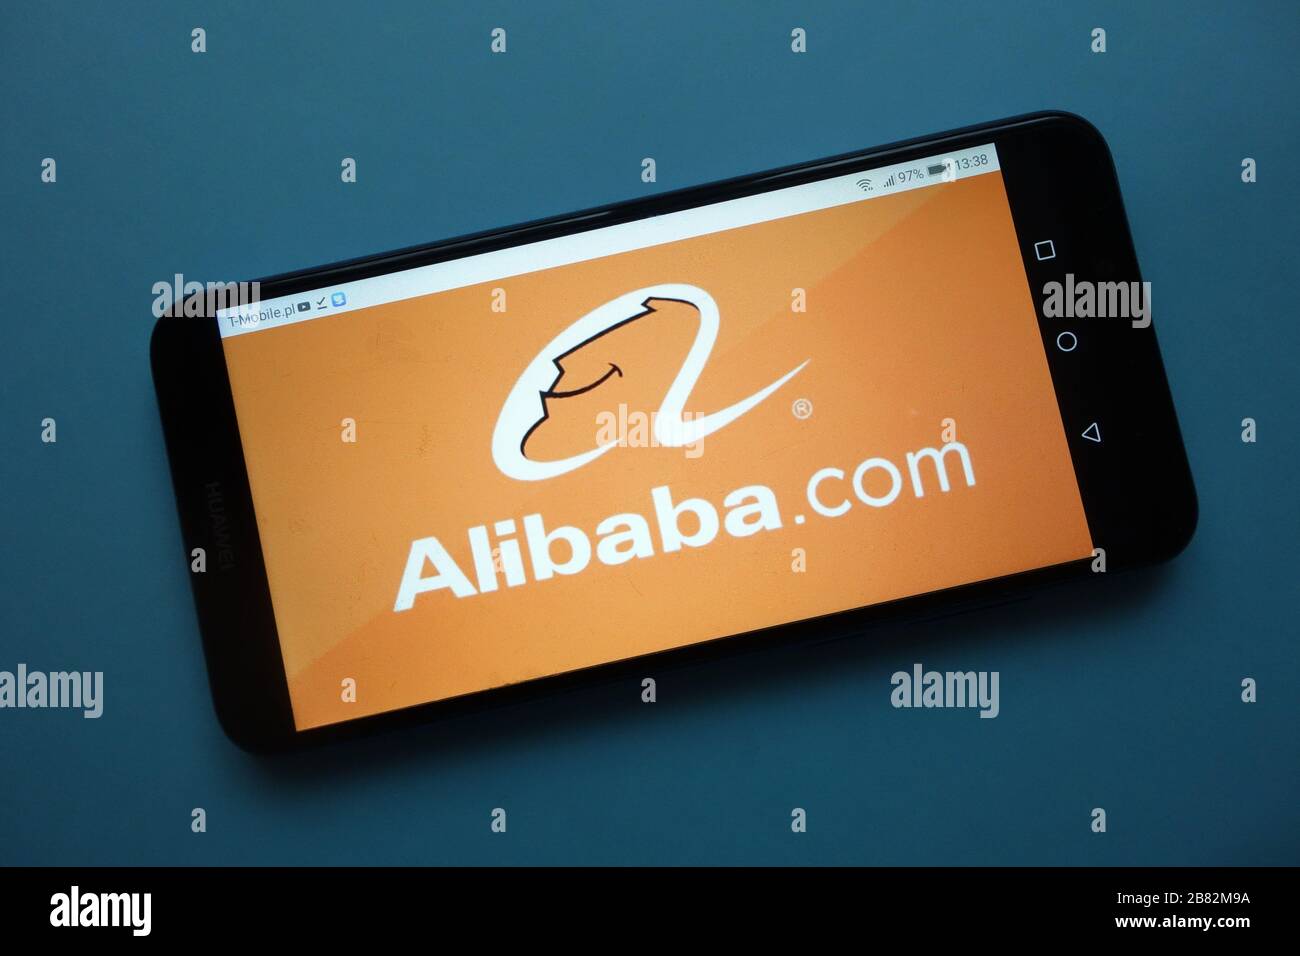 Alibaba.com logo displayed on smartphone Stock Photo